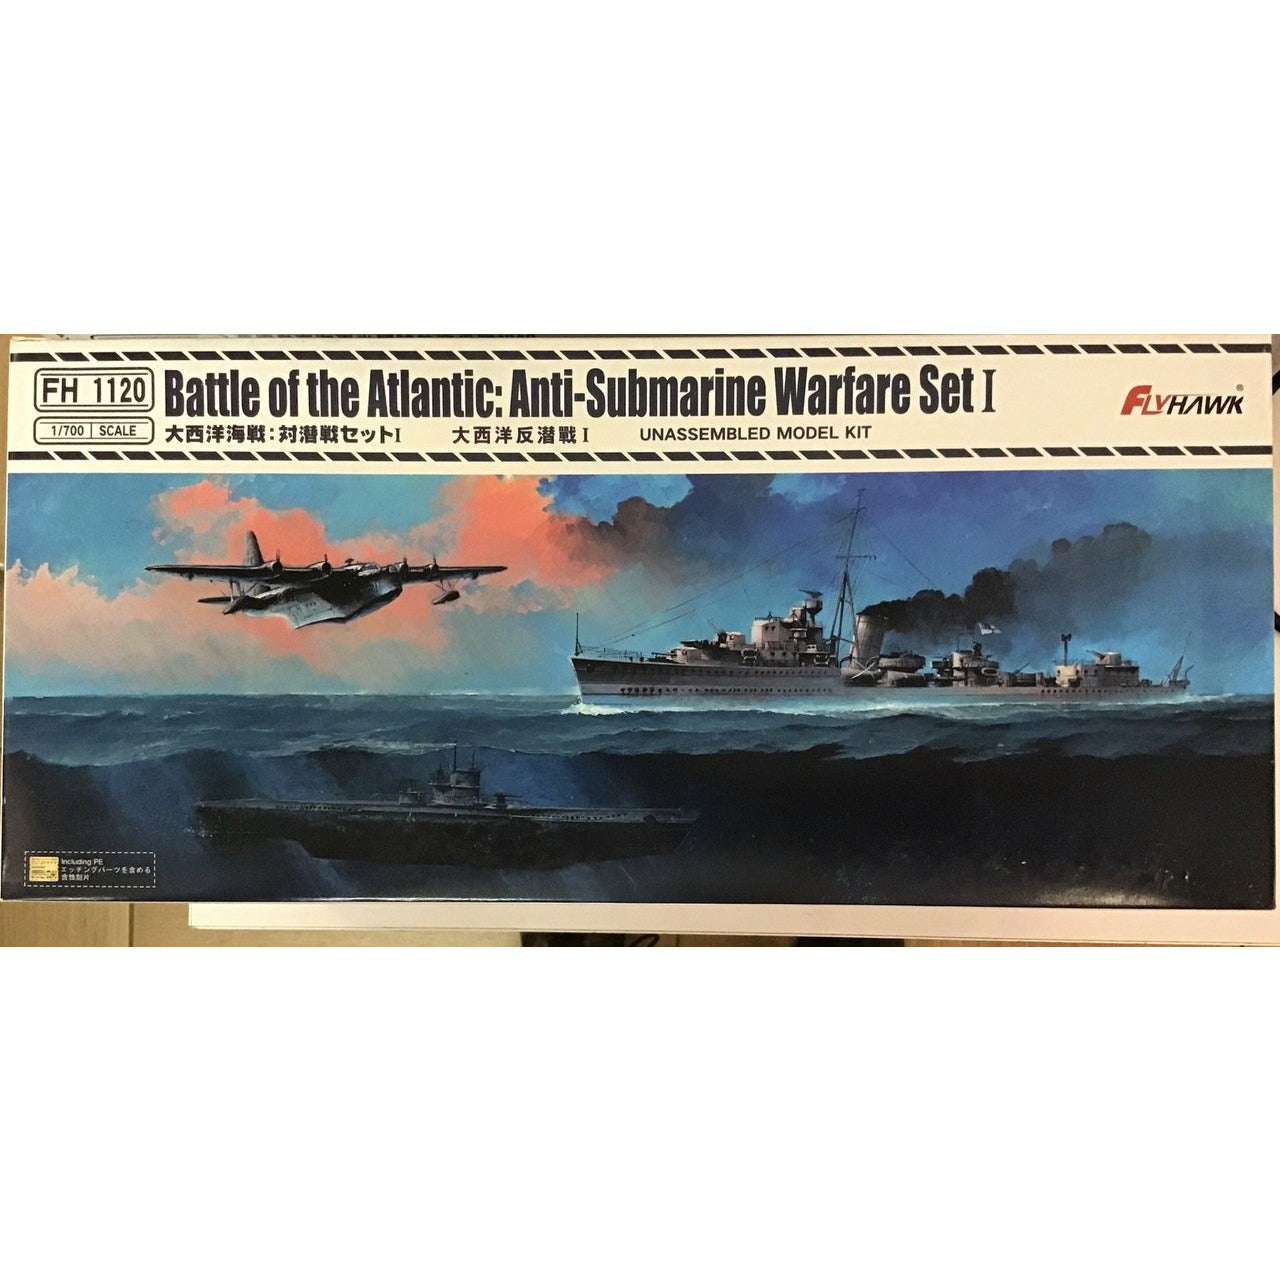 Battle of the Atlantic: Anti-Submarine Warfare Set I 1/700 Model Ship Kit #FH1120 by Flyhawk